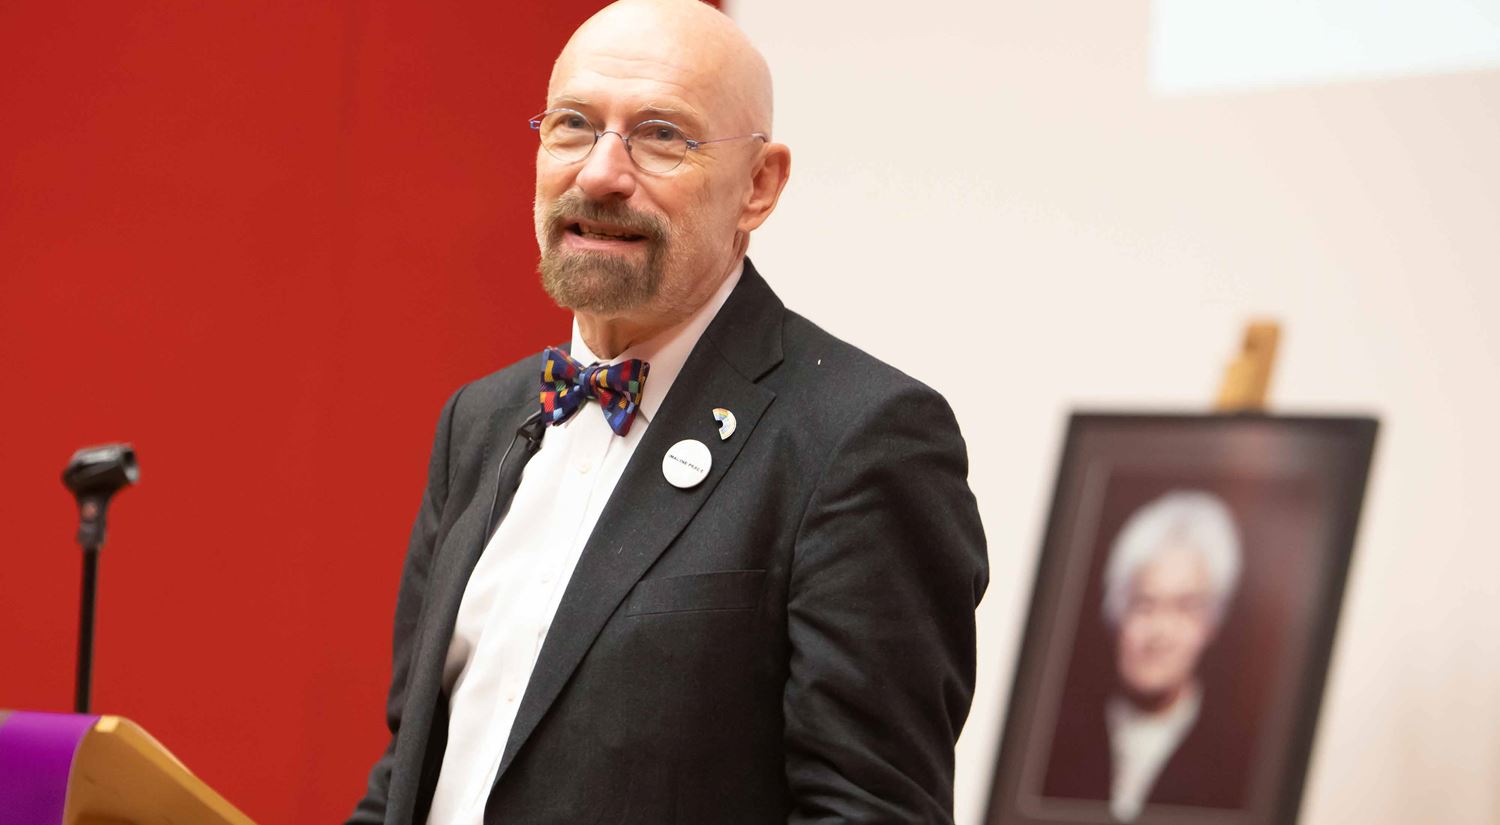 Professor Rainer Schulze speaking at the Dora Love Prize 2020 awards evening